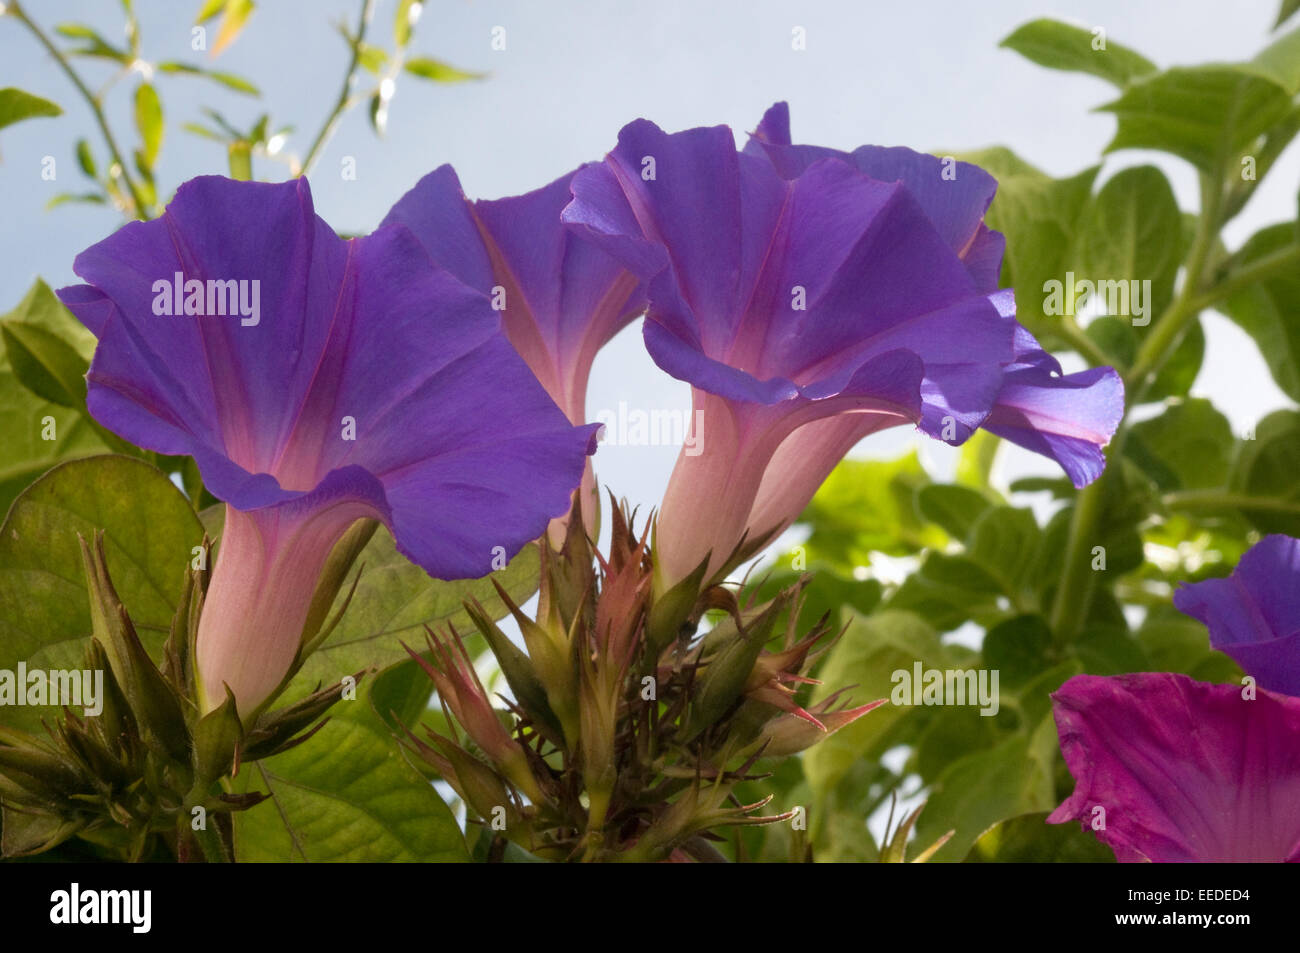 Purple pink convolvulus. Convolvulus /kənˈvɒlvjuːləs/ is a genus of about 200 to 250 species of flowering plants Stock Photo